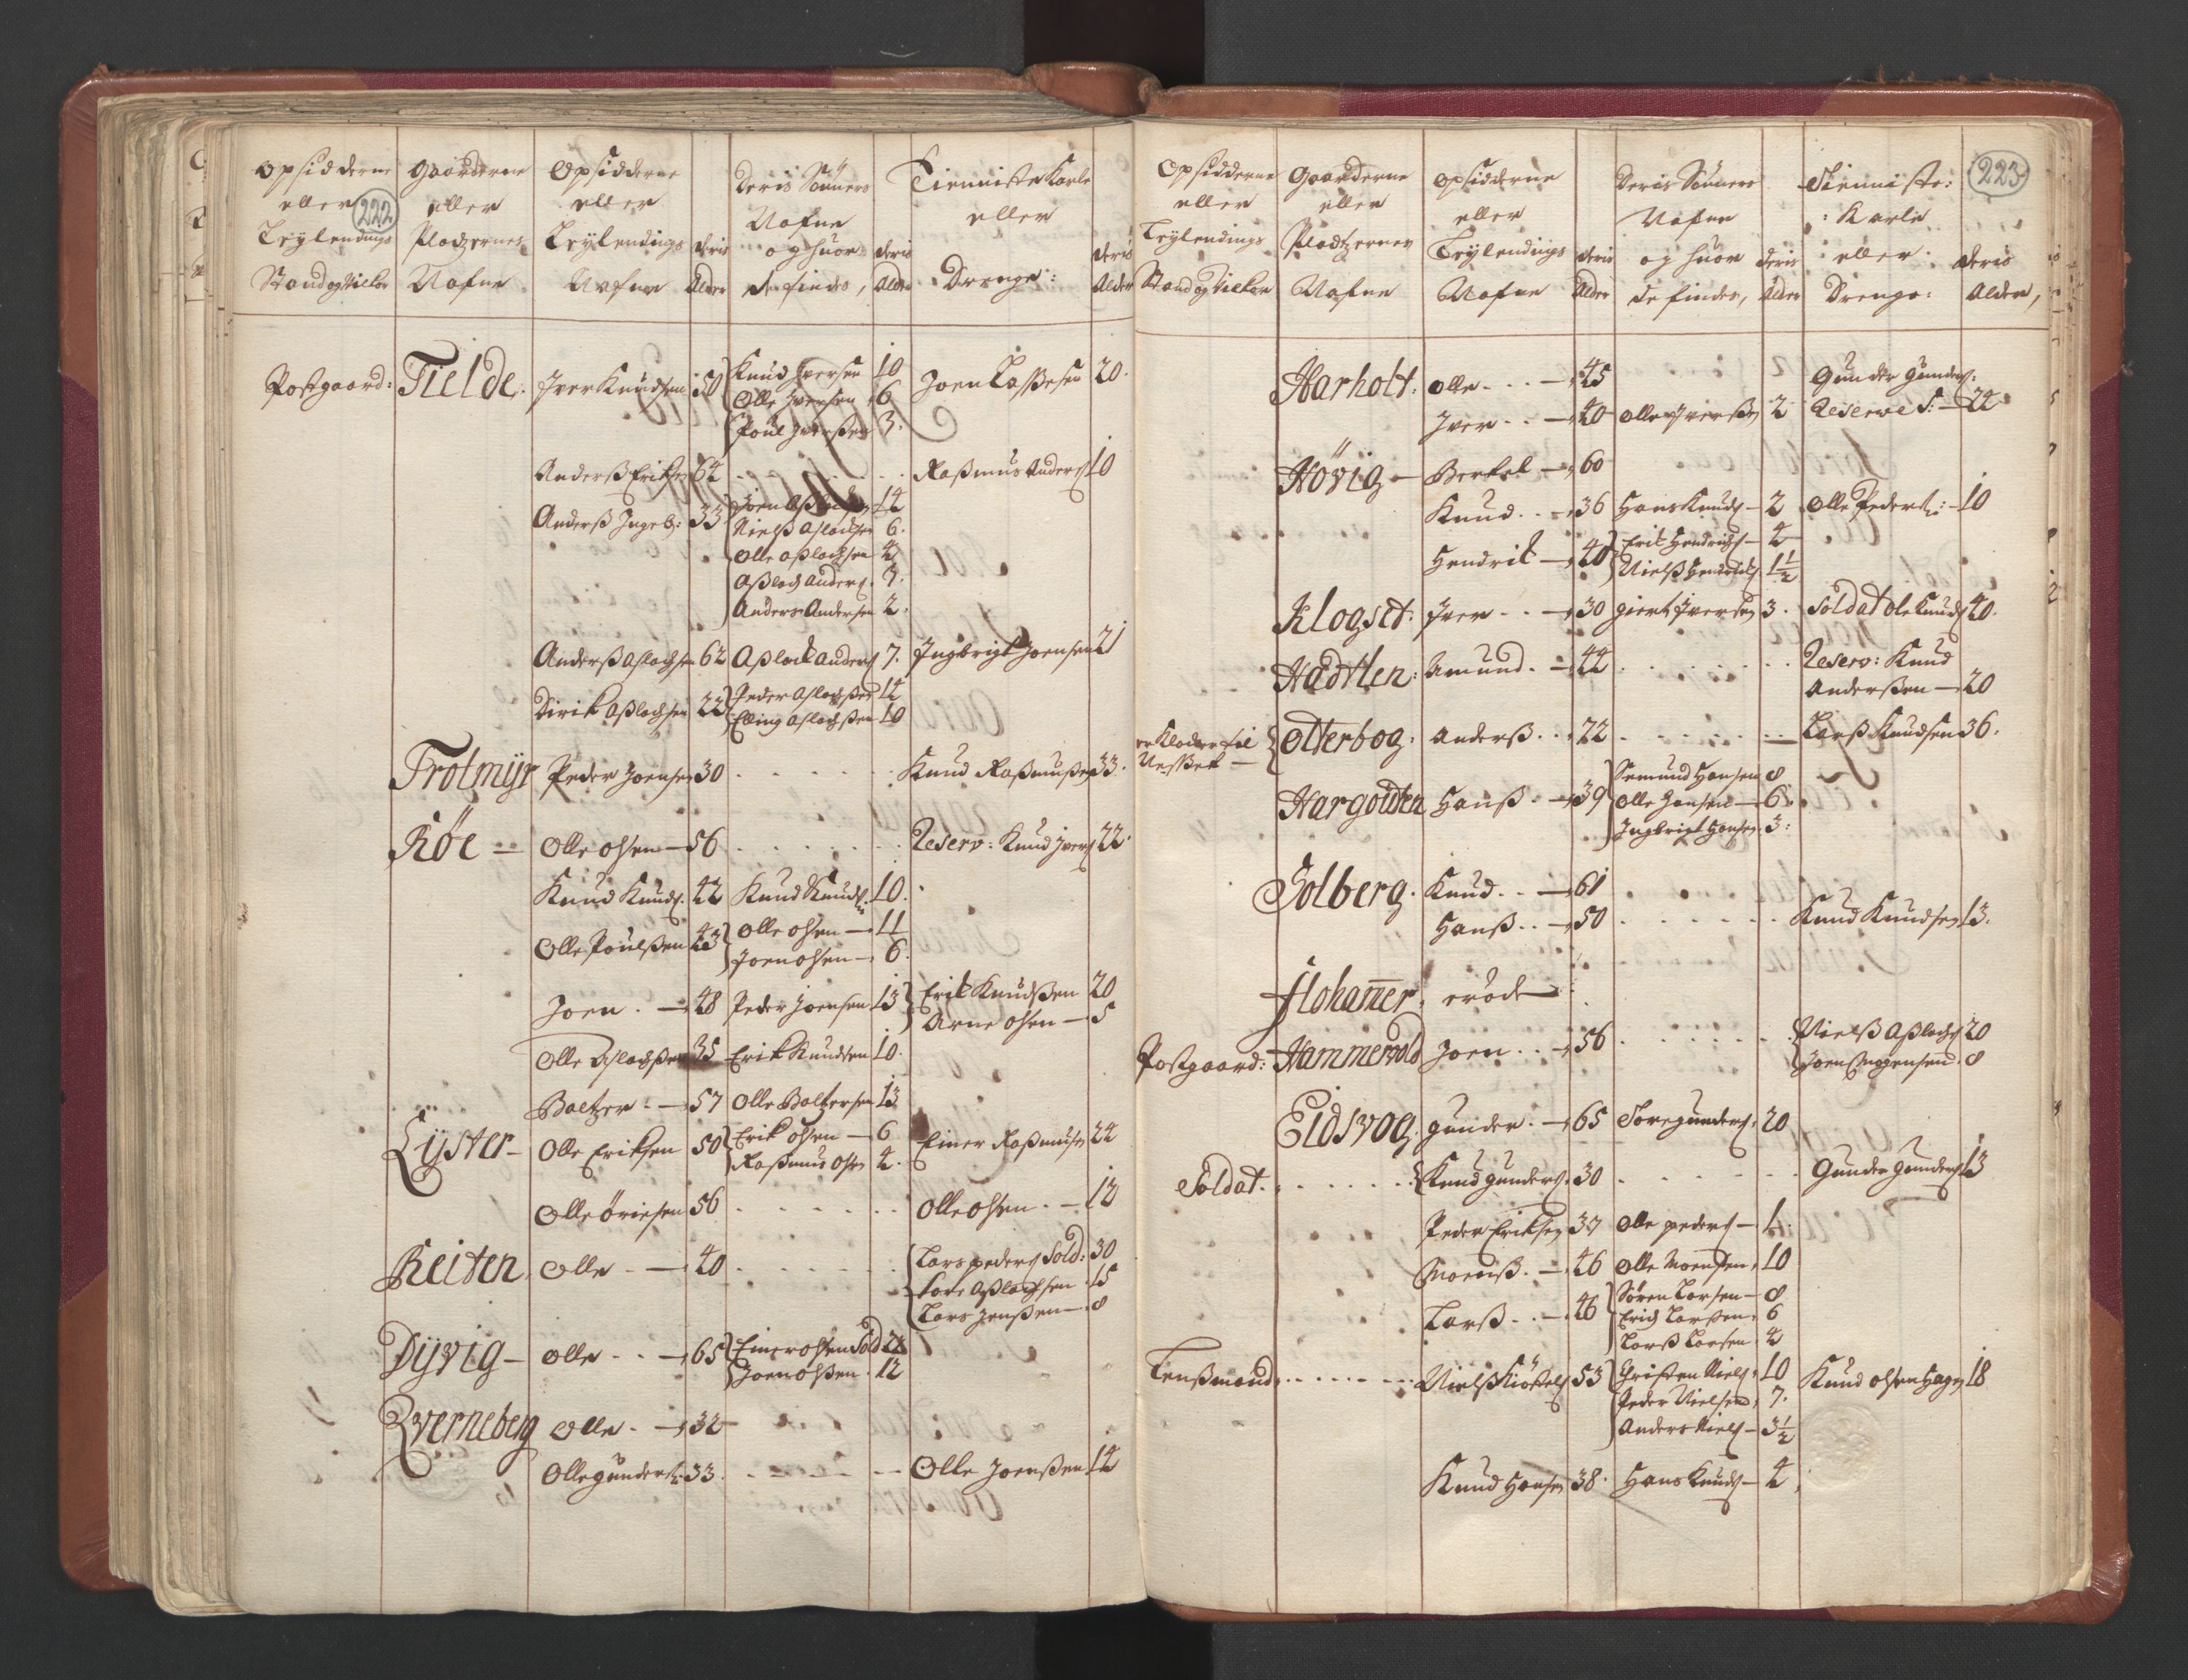 RA, Manntallet 1701, nr. 11: Nordmøre fogderi og Romsdal fogderi, 1701, s. 222-223